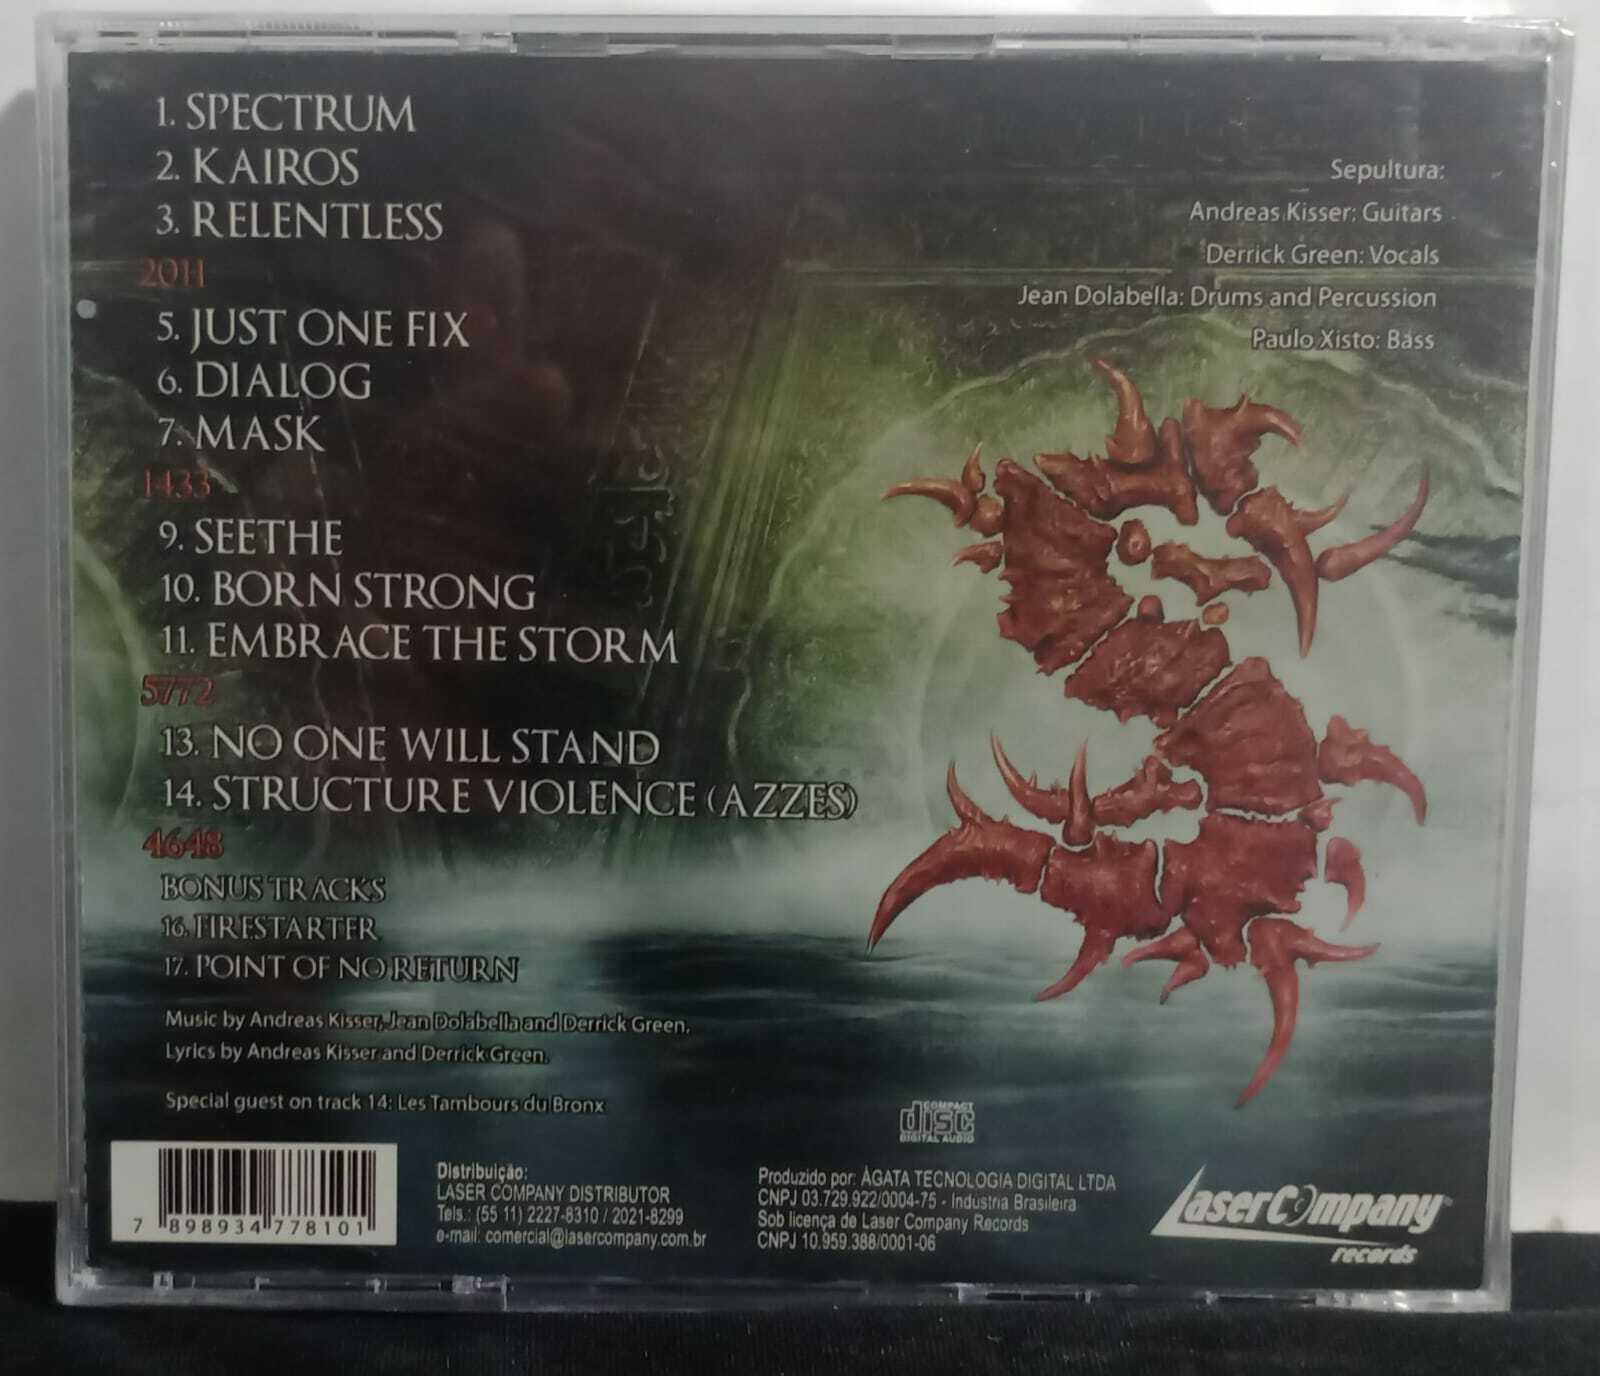 CD - Sepultura - Kairos (CD+DVD/Lacrado)